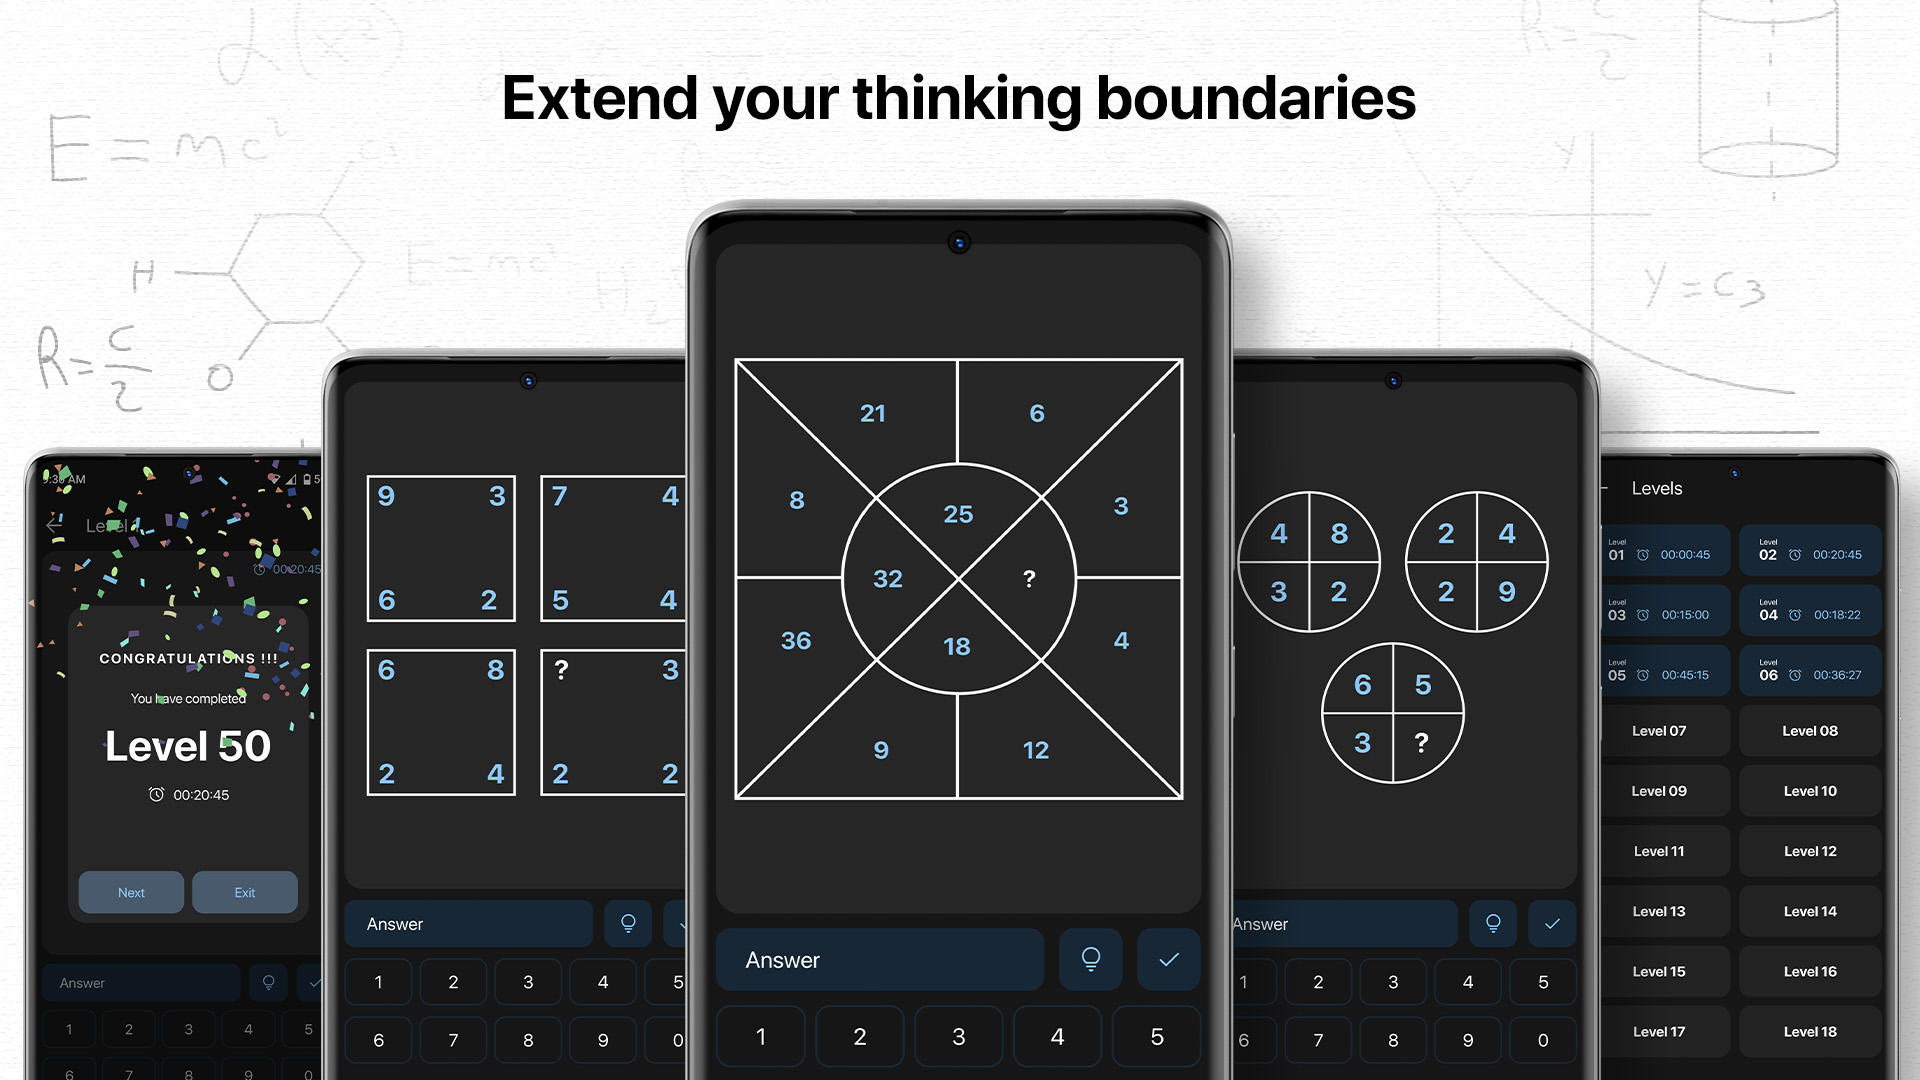 10 Jogos de matemática online para Android e iPhone